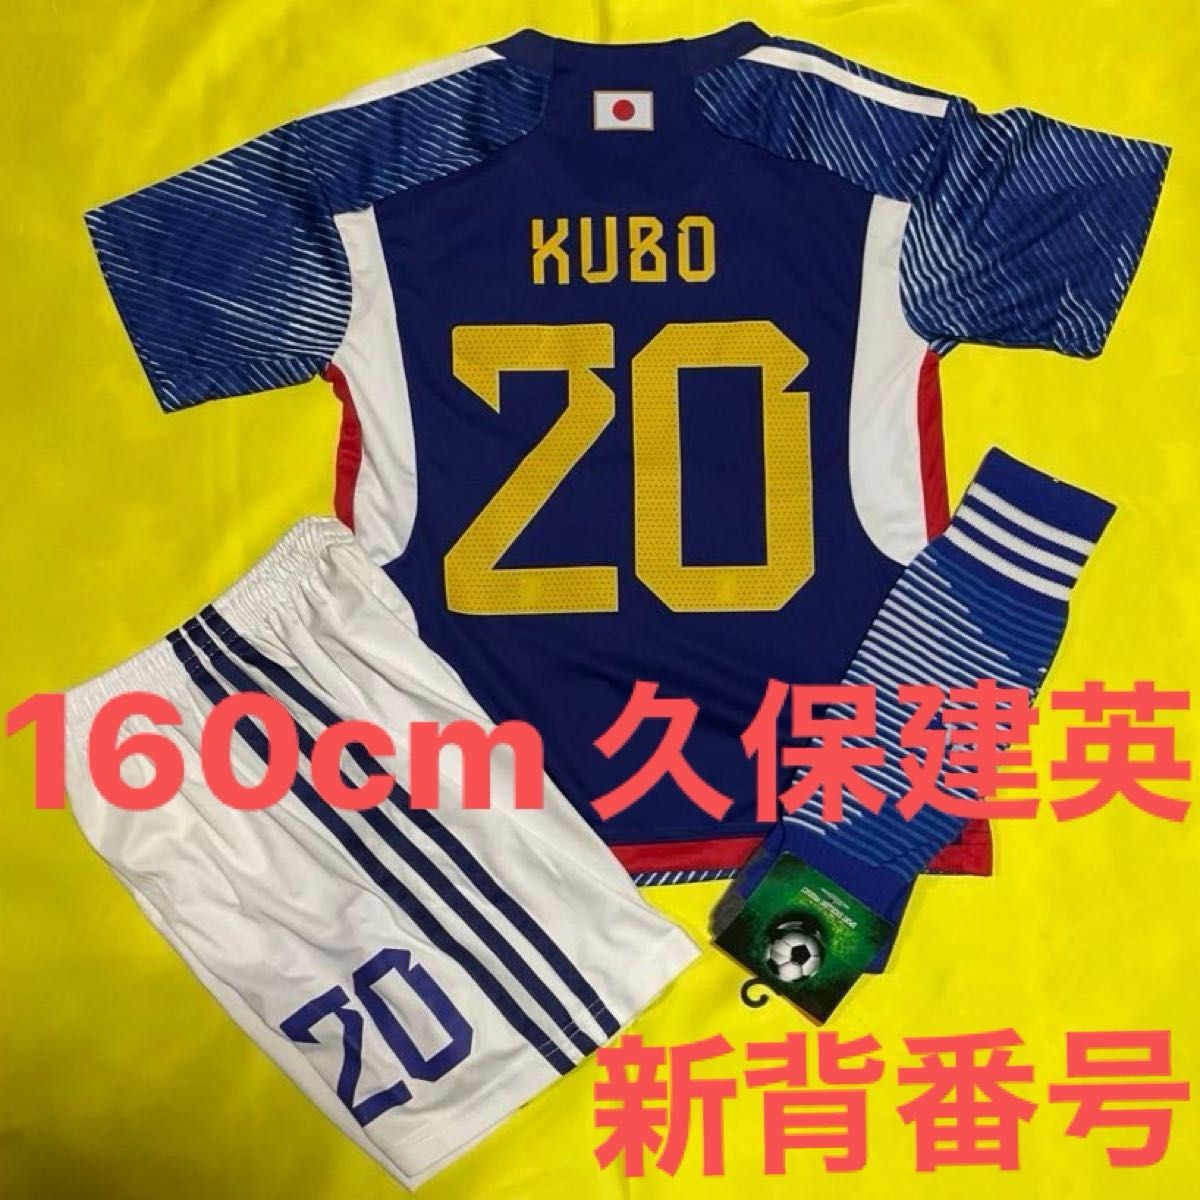 160cm 日本代表 新背番号 20番 久保建英 子供サッカーユニフォーム  ソックスセット キッズ